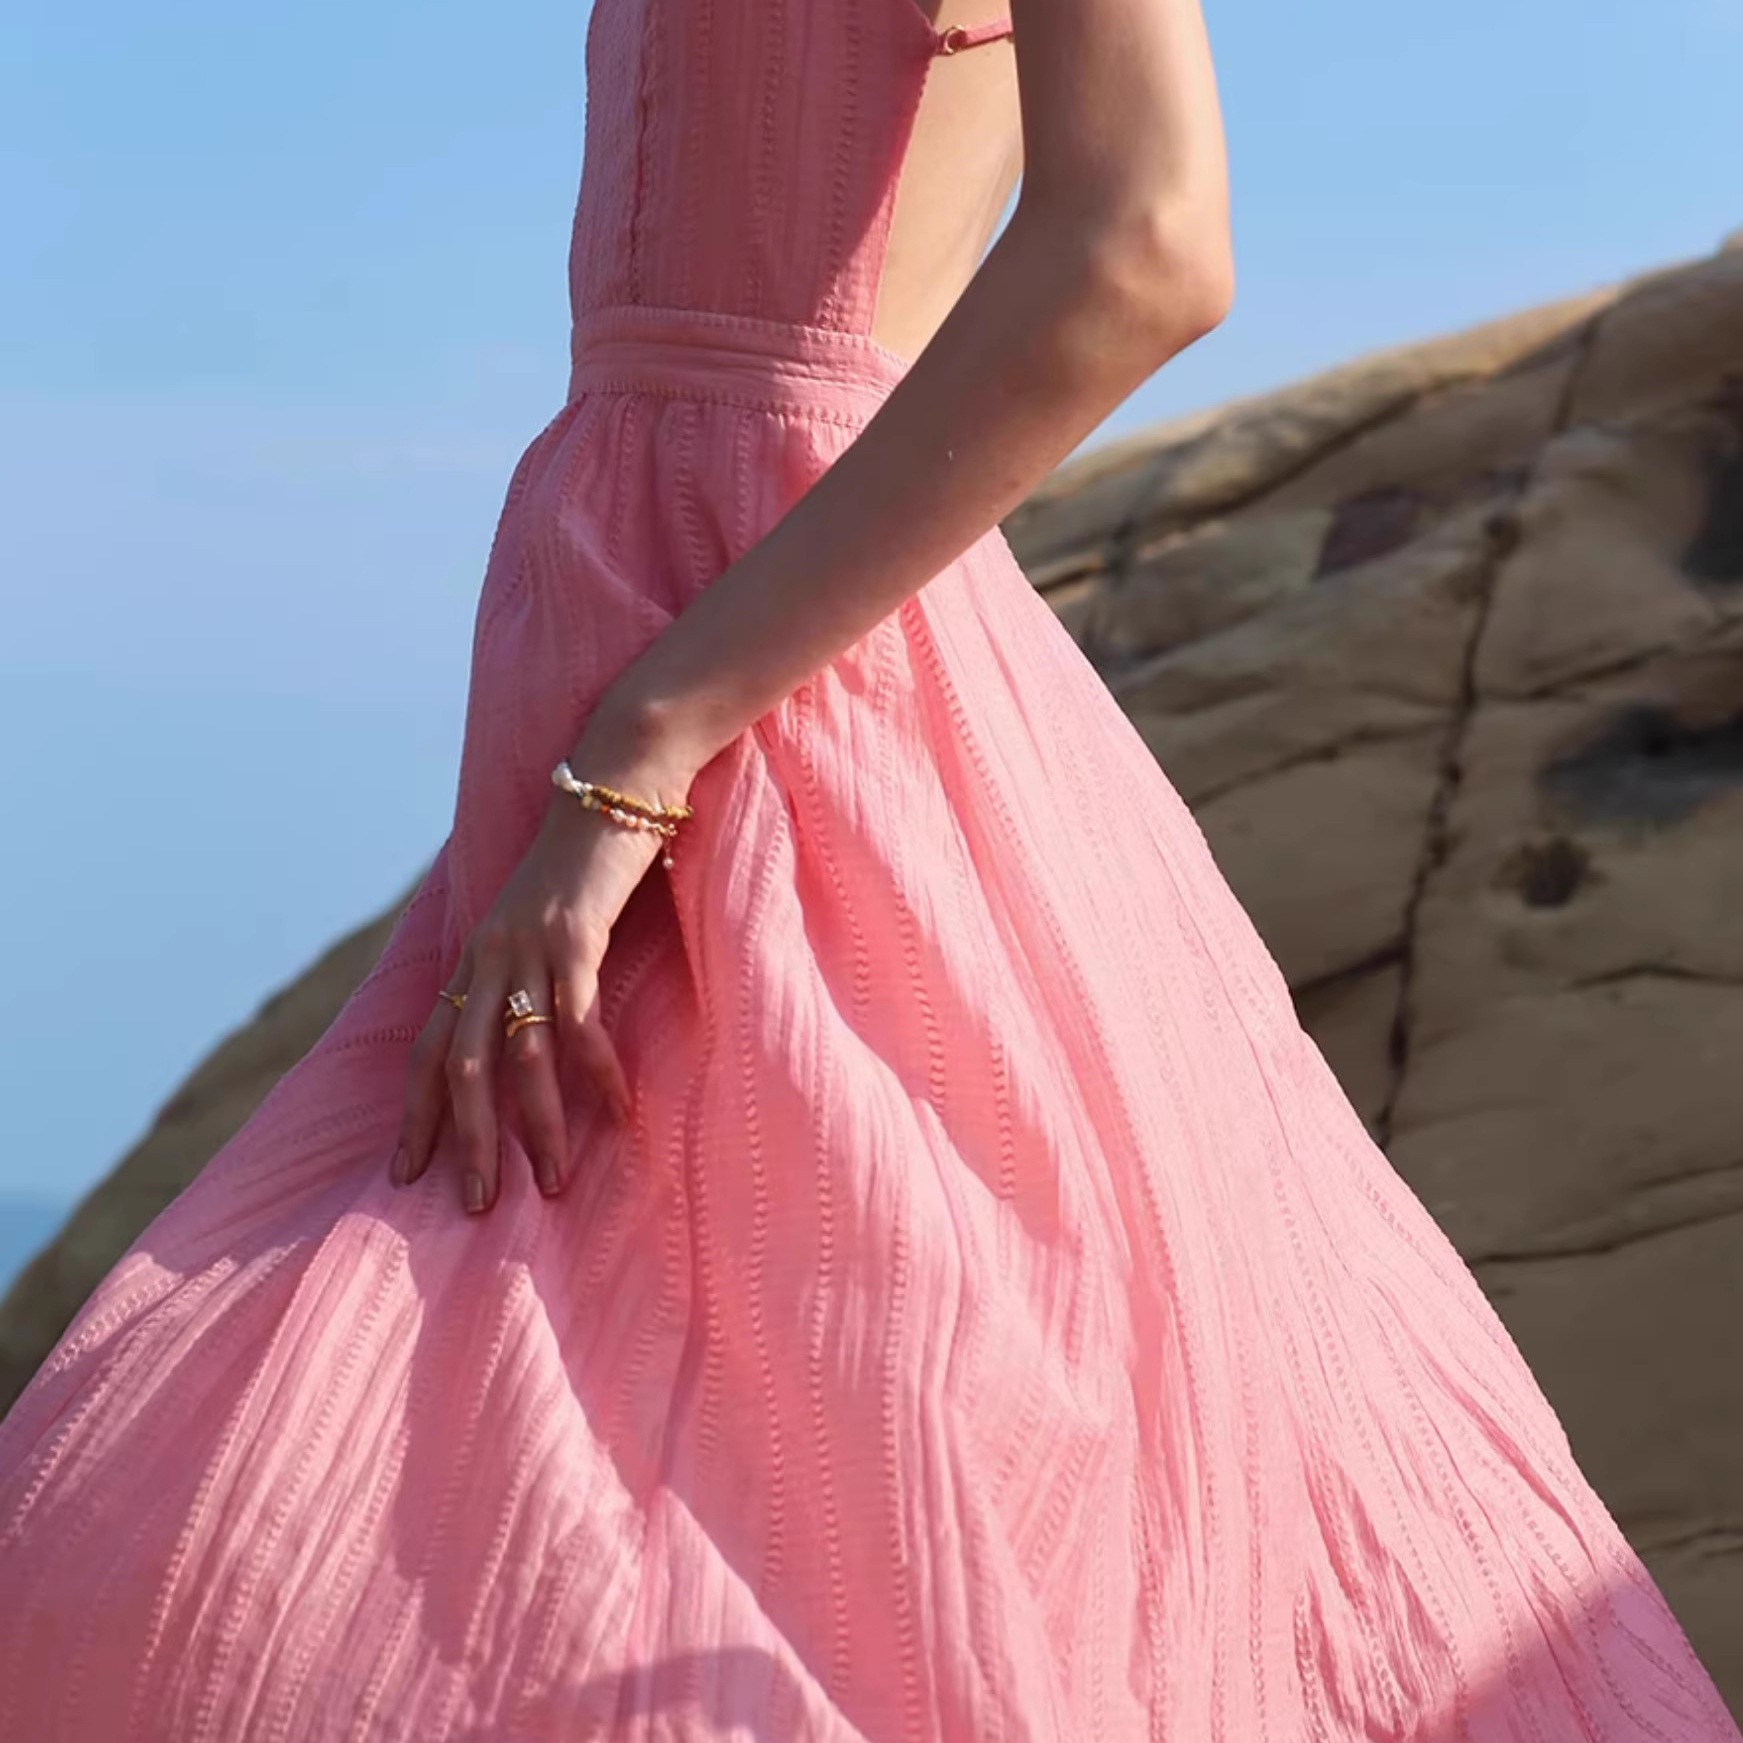 Customized Fabric Pink Chiffon Halter Long Dresses for Women (7)